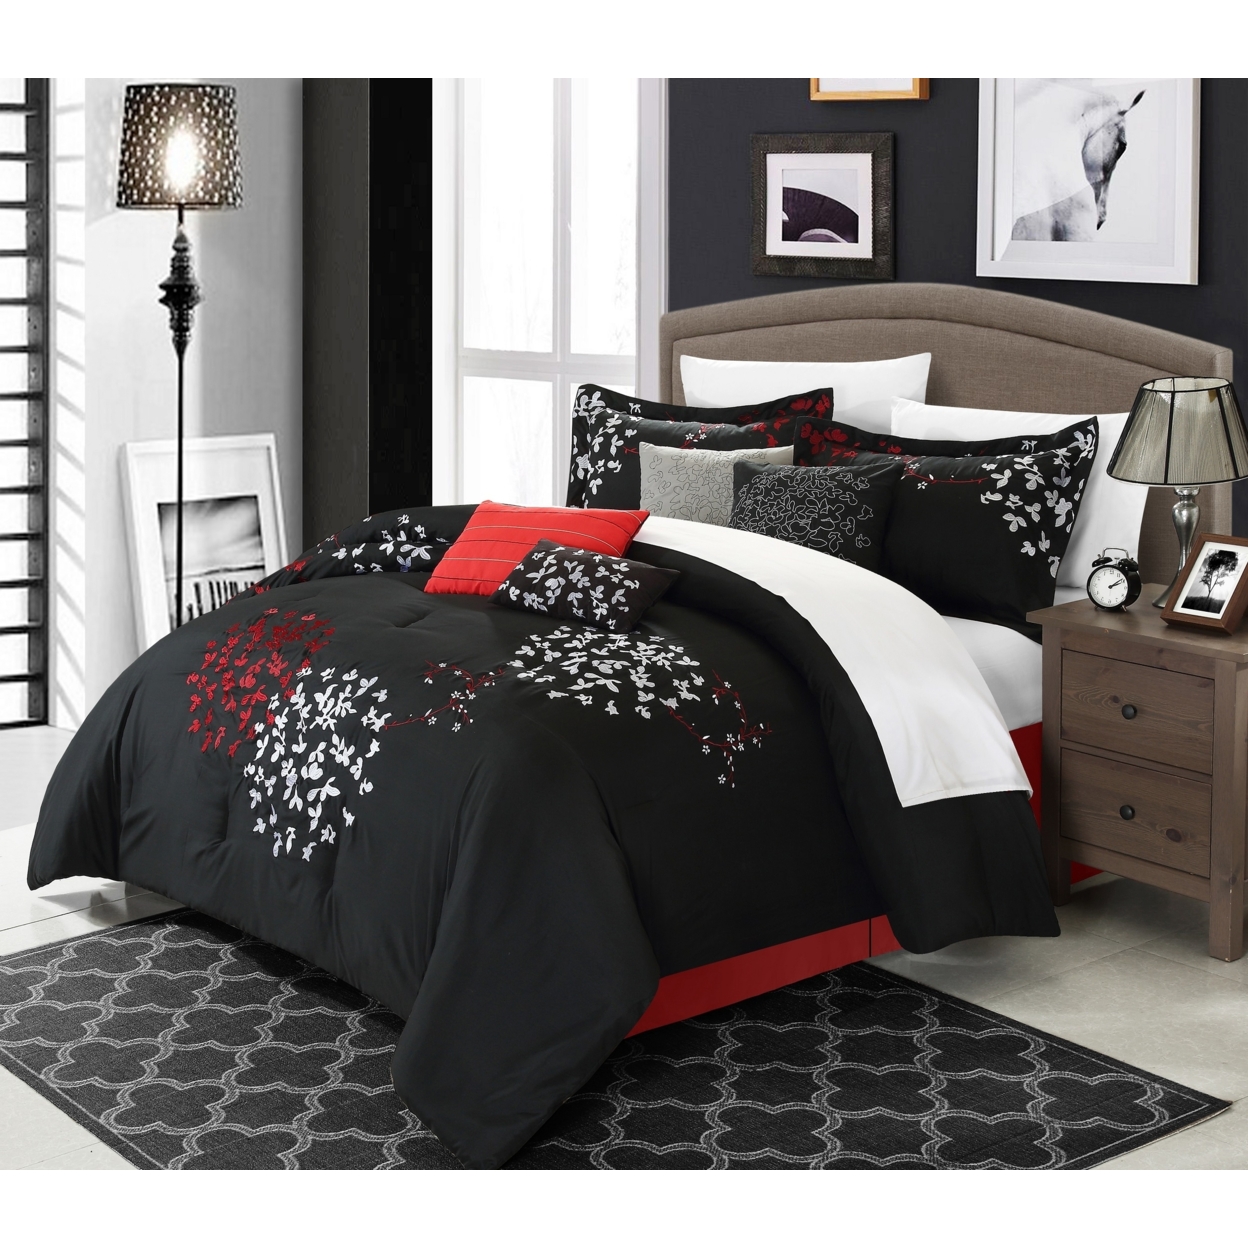 Cheila 8-Piece Embroidered Comforter Set - Black, Queen